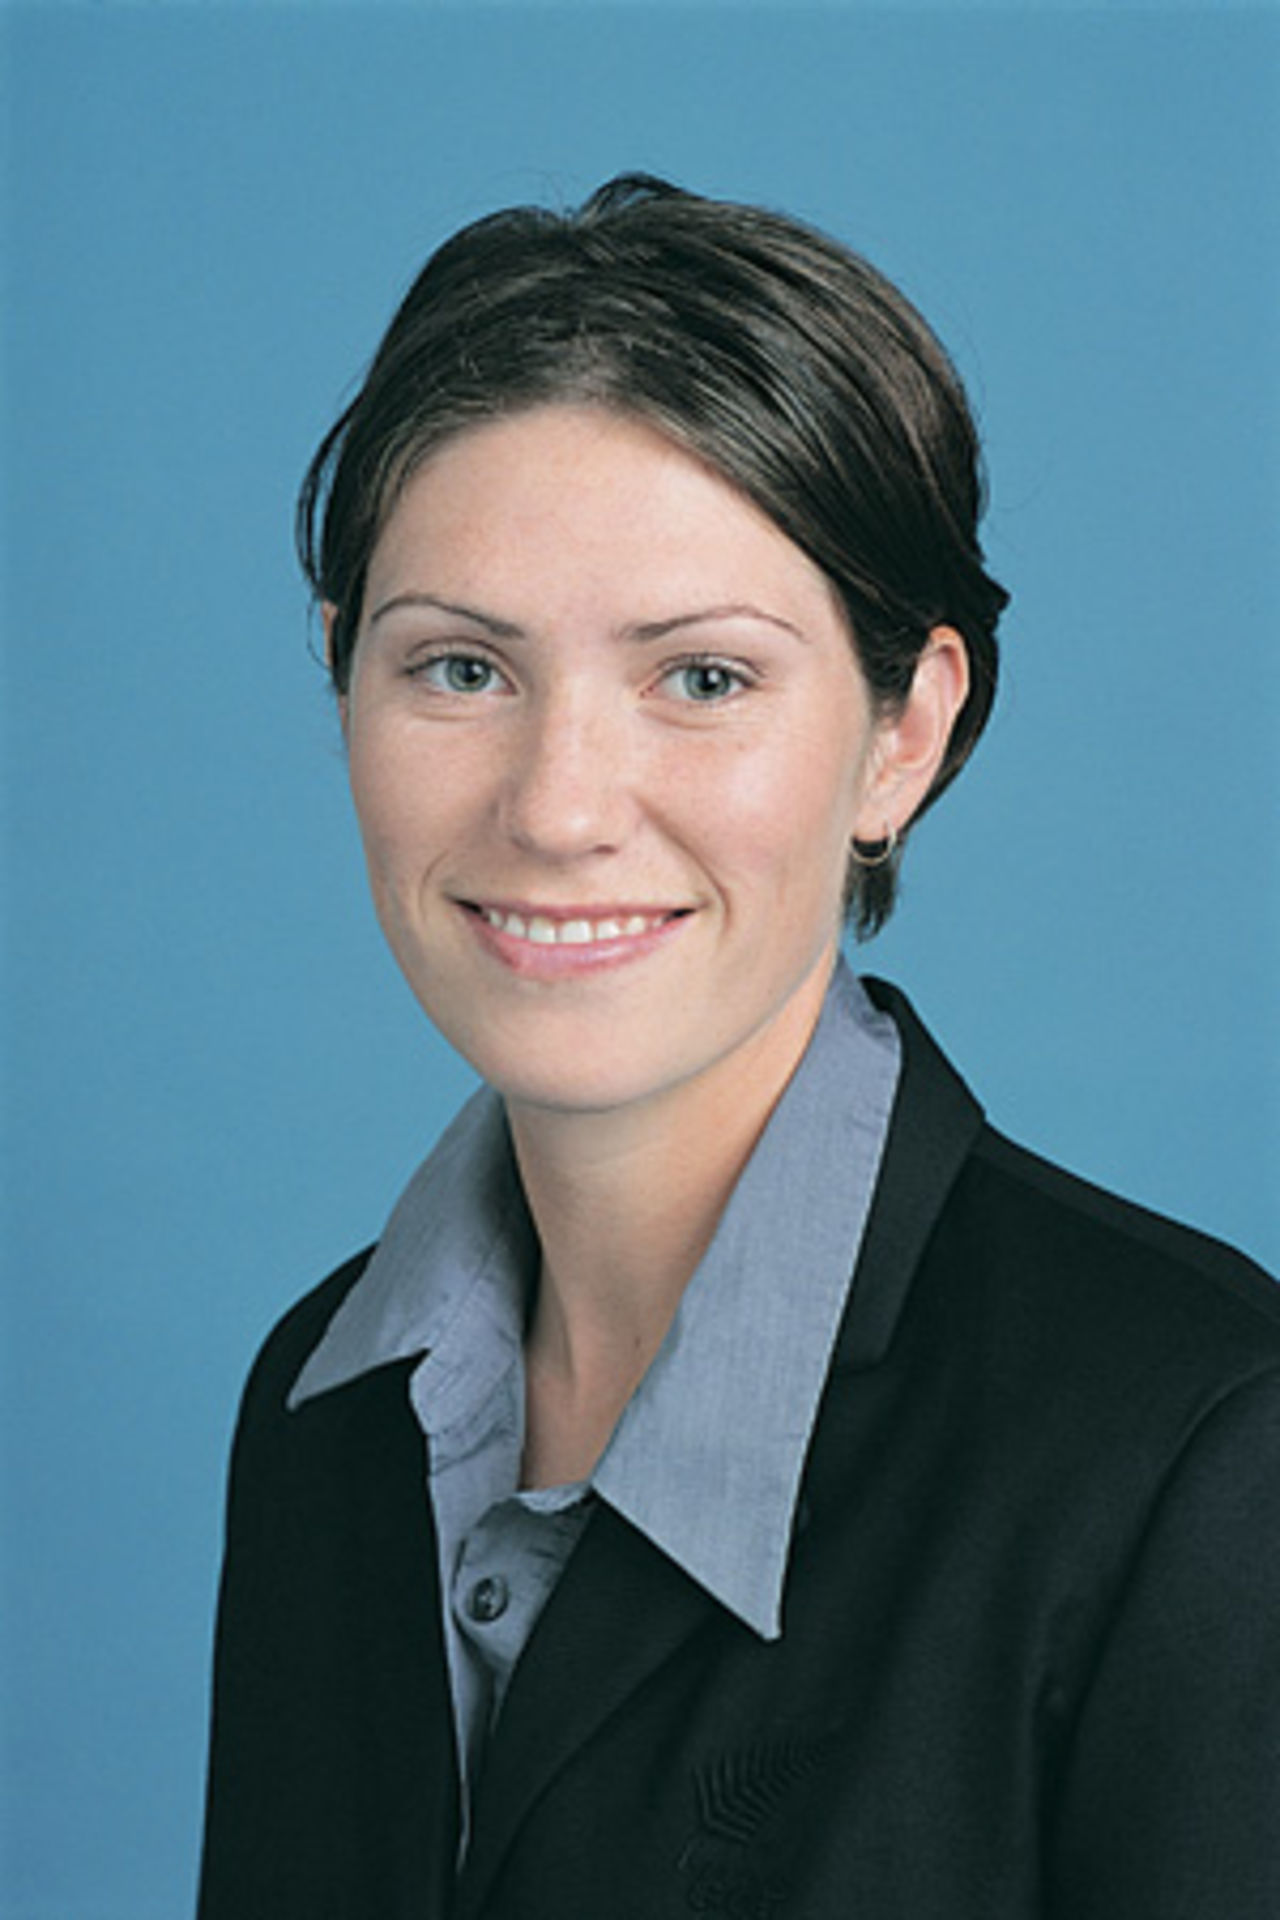 Portrait of Anna Corbin - New Zealand women's player in the 2002 season.